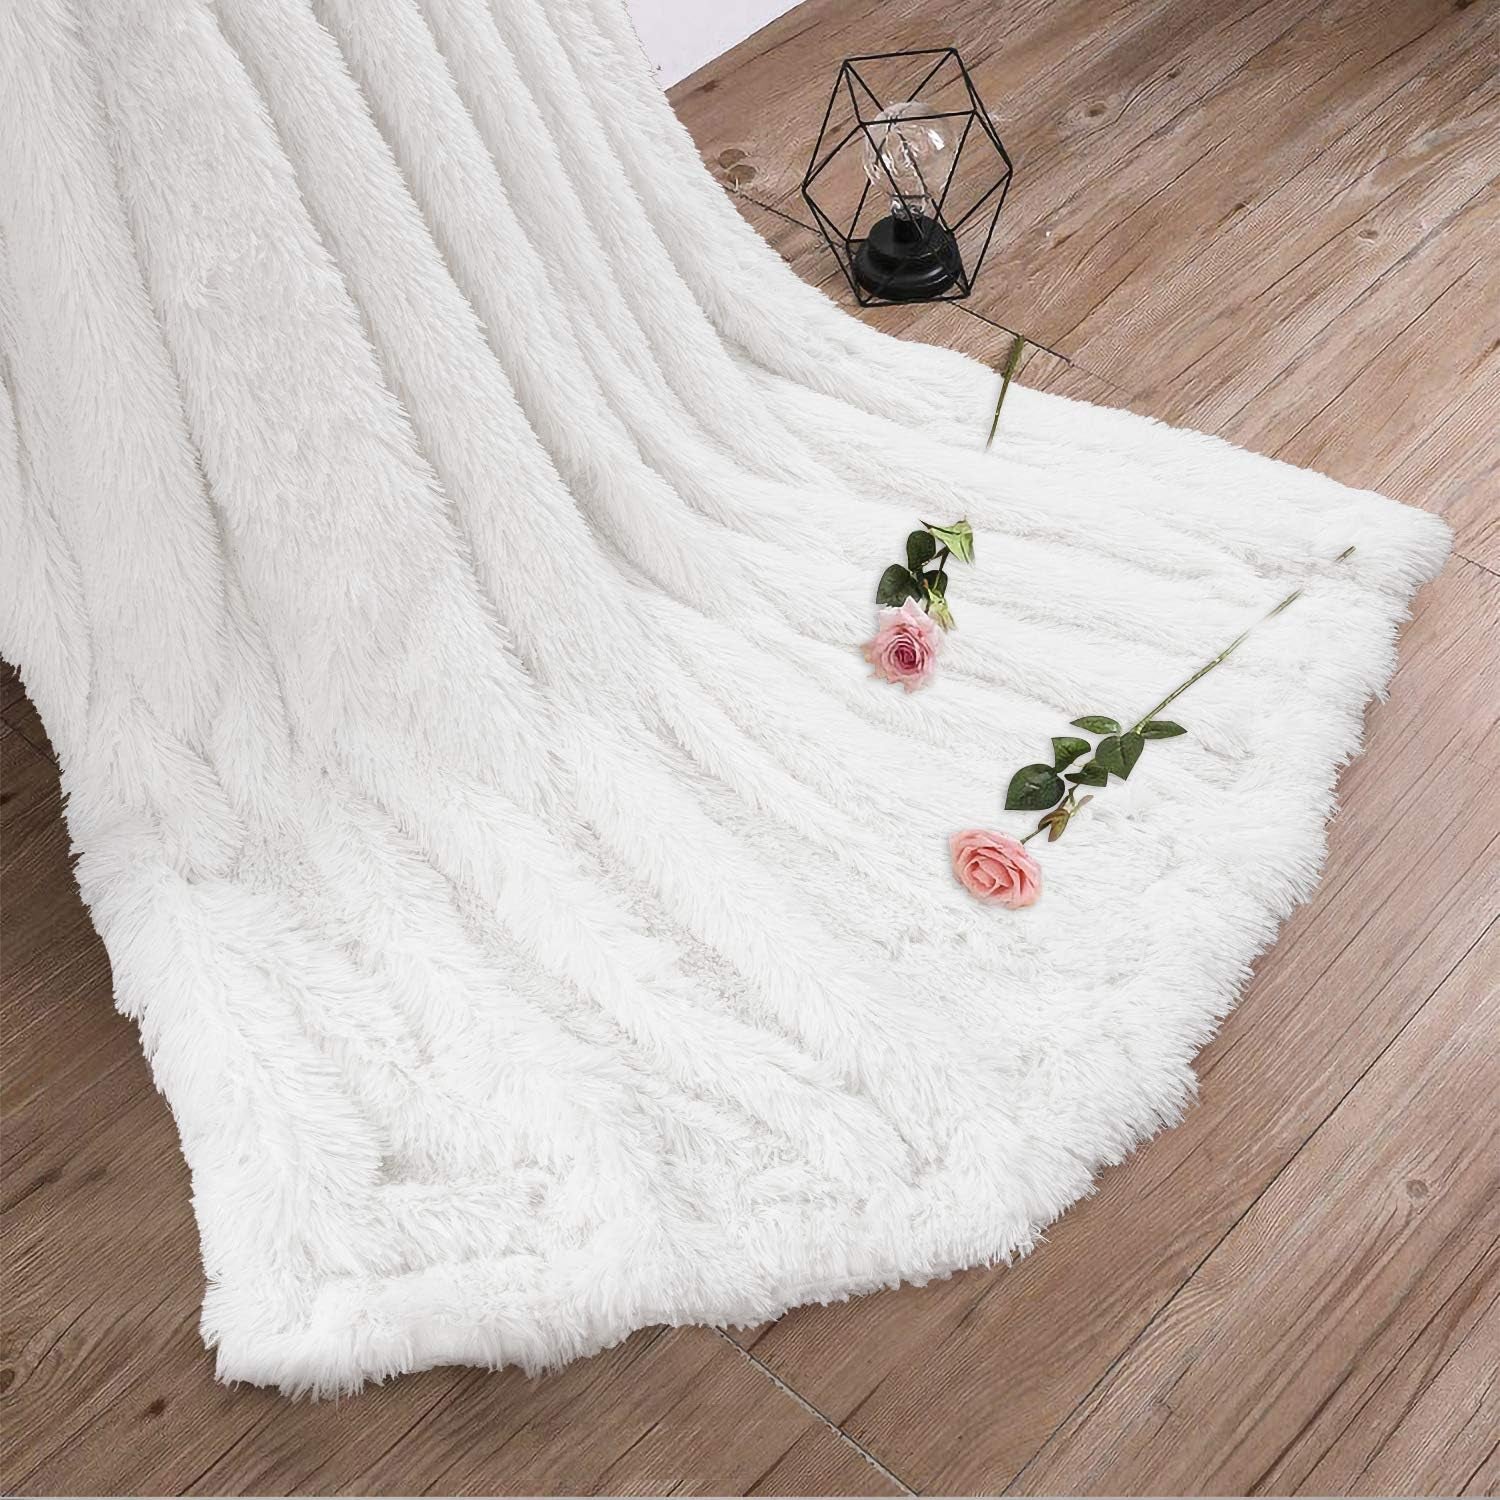 Super Soft Shaggy Faux Fur Blanket